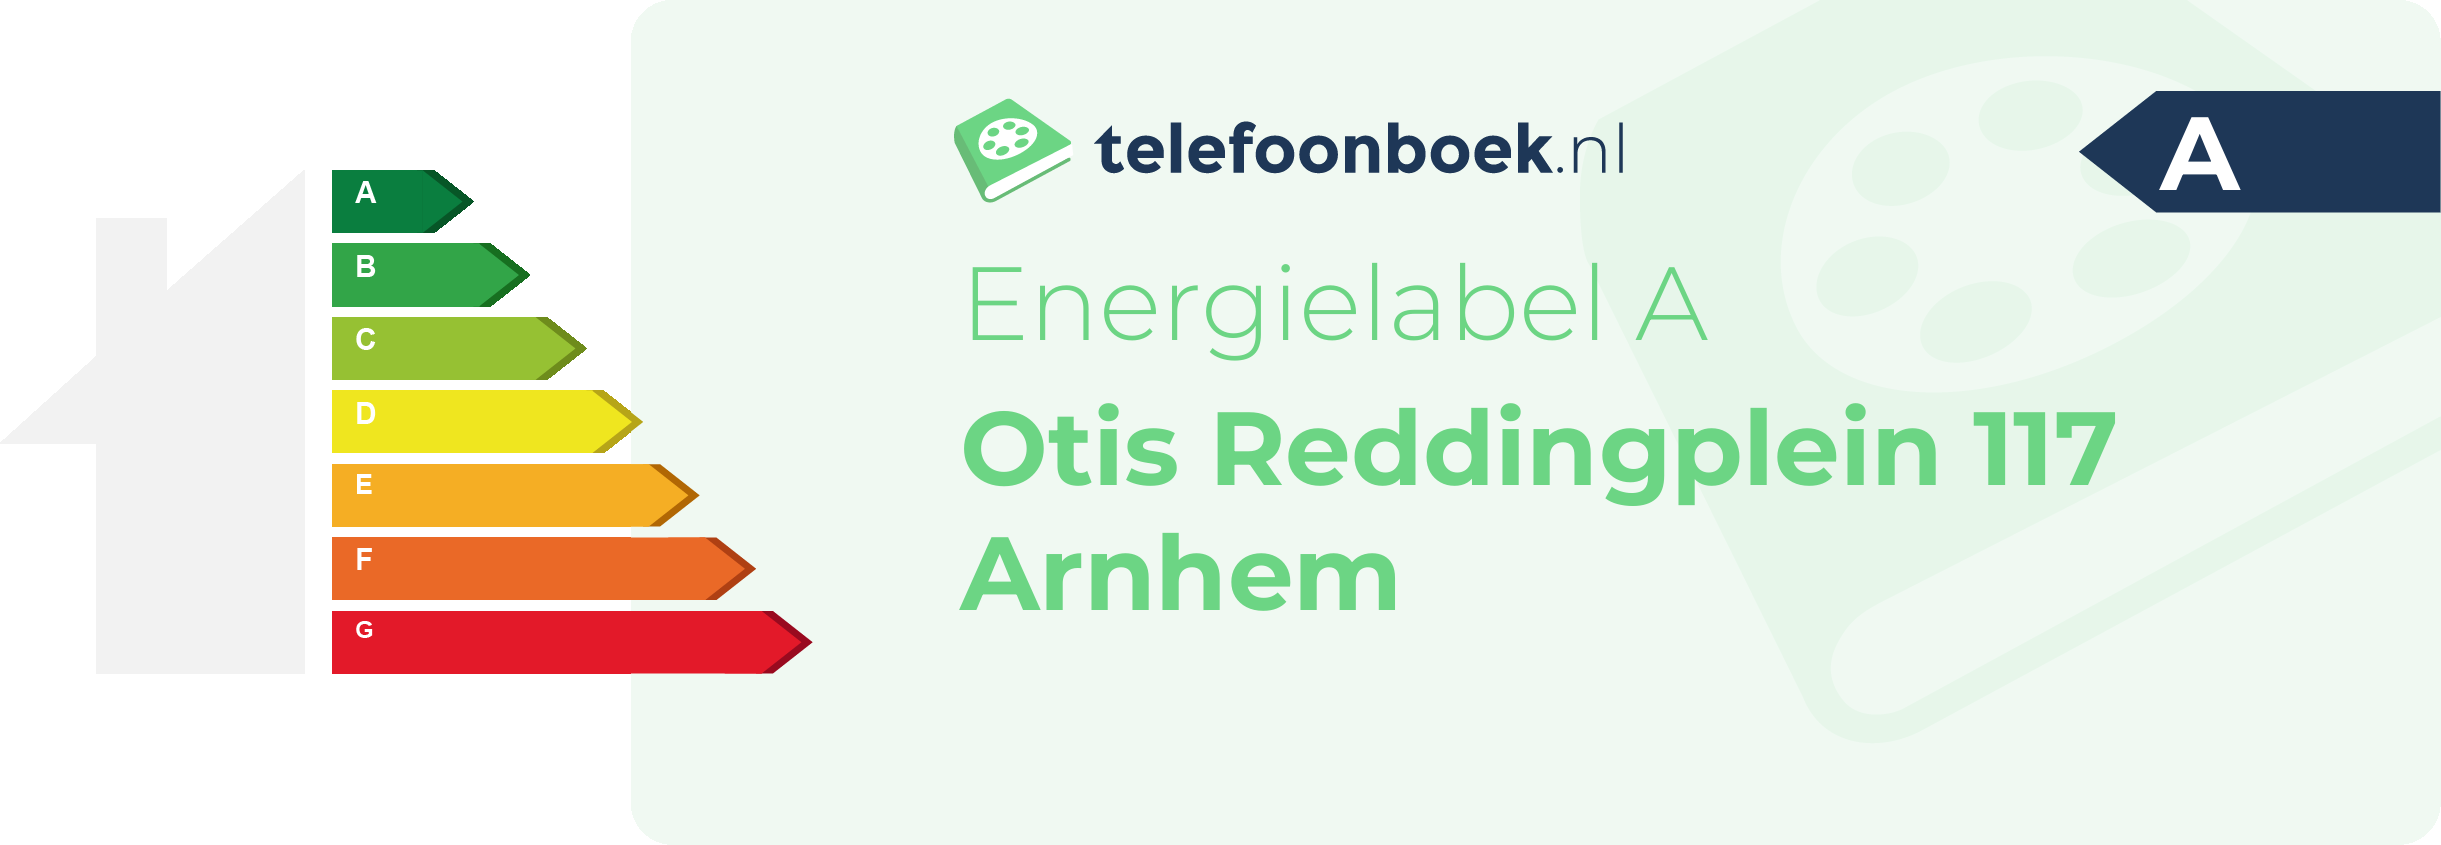 Energielabel Otis Reddingplein 117 Arnhem